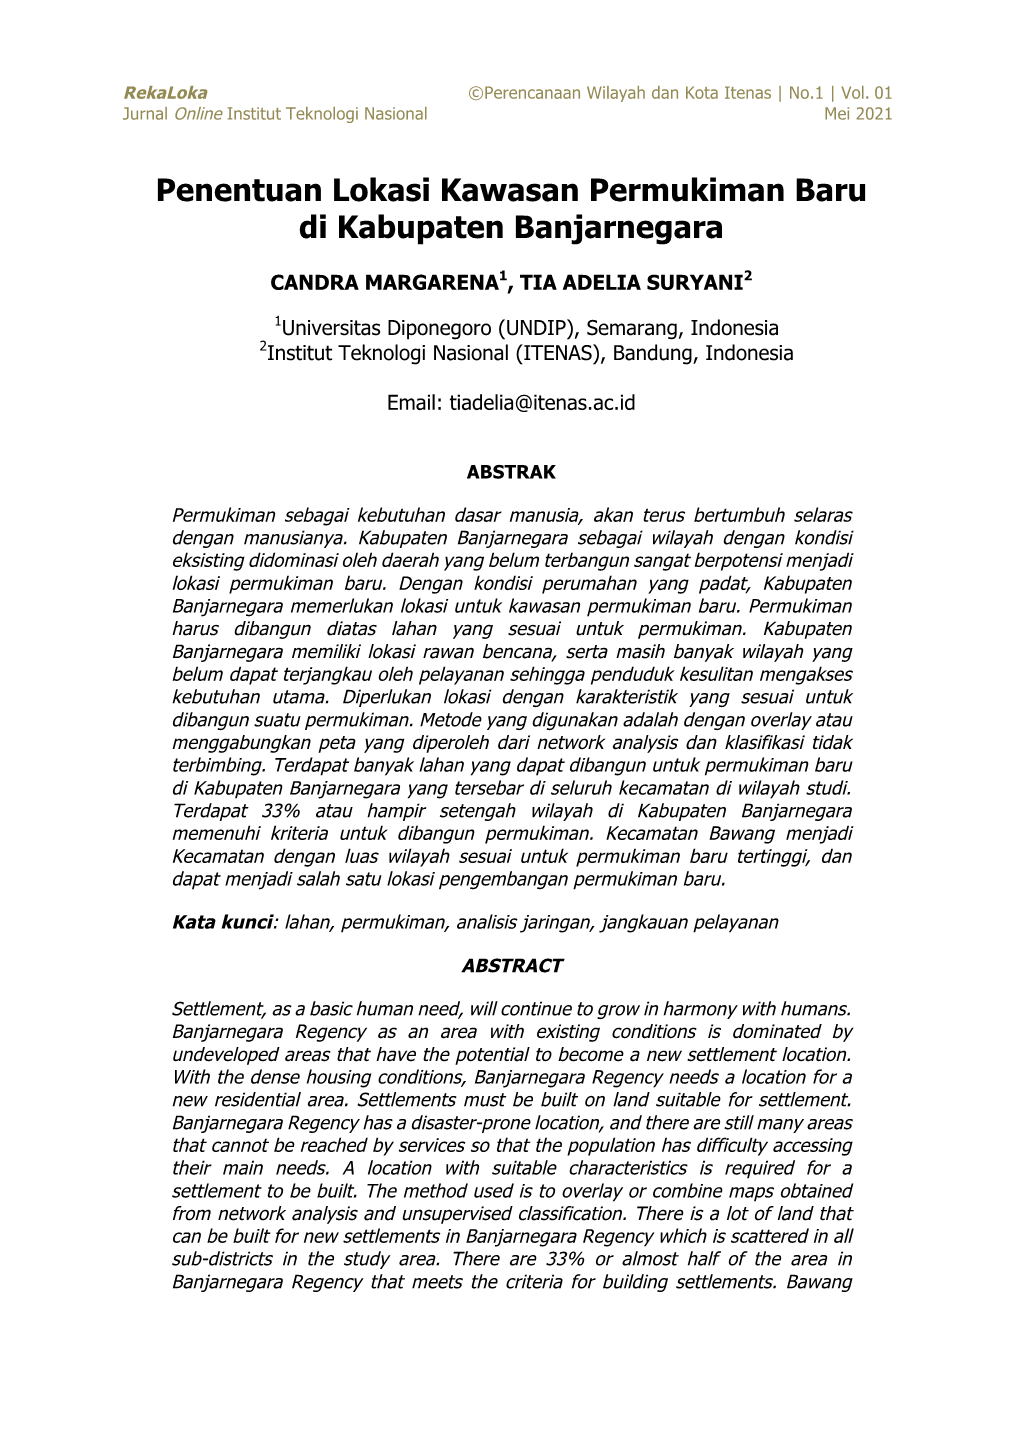 Penentuan Lokasi Kawasan Permukiman Baru Di Kabupaten Banjarnegara